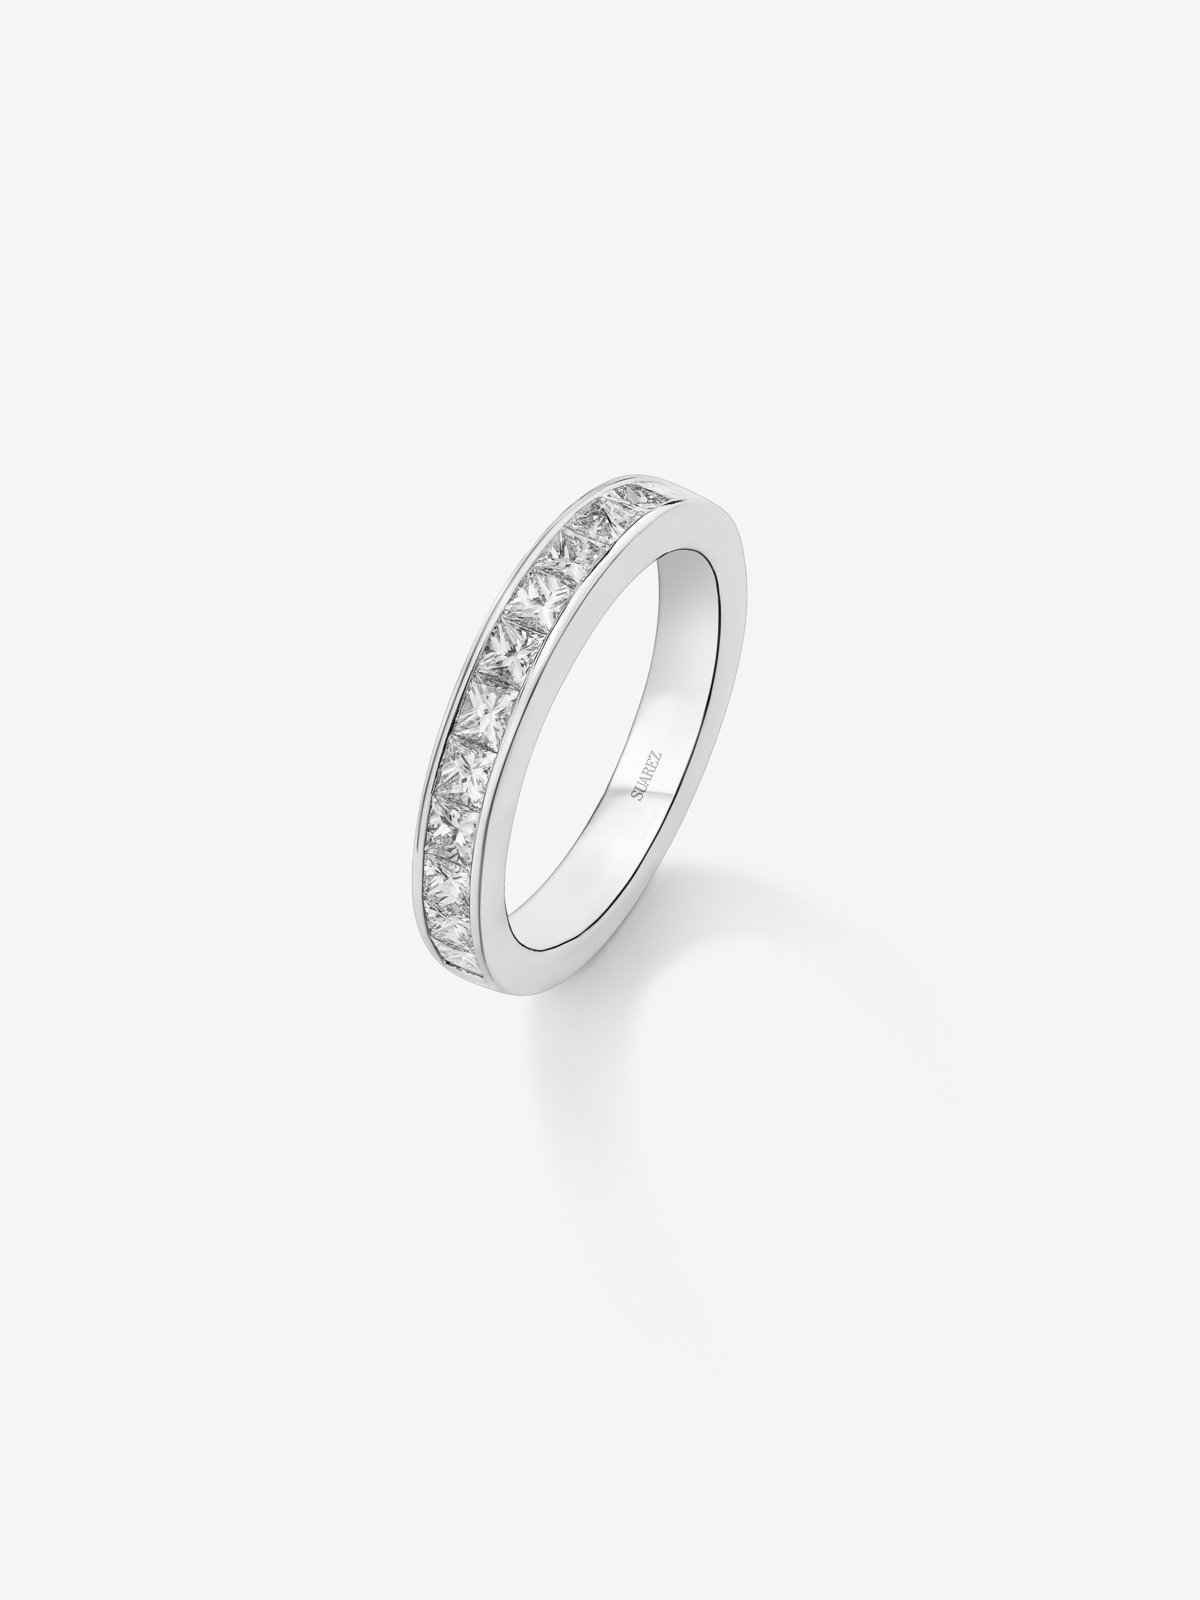 18K white gold half eternity engagement ring with princess cut diamonds on rail 1.10ct